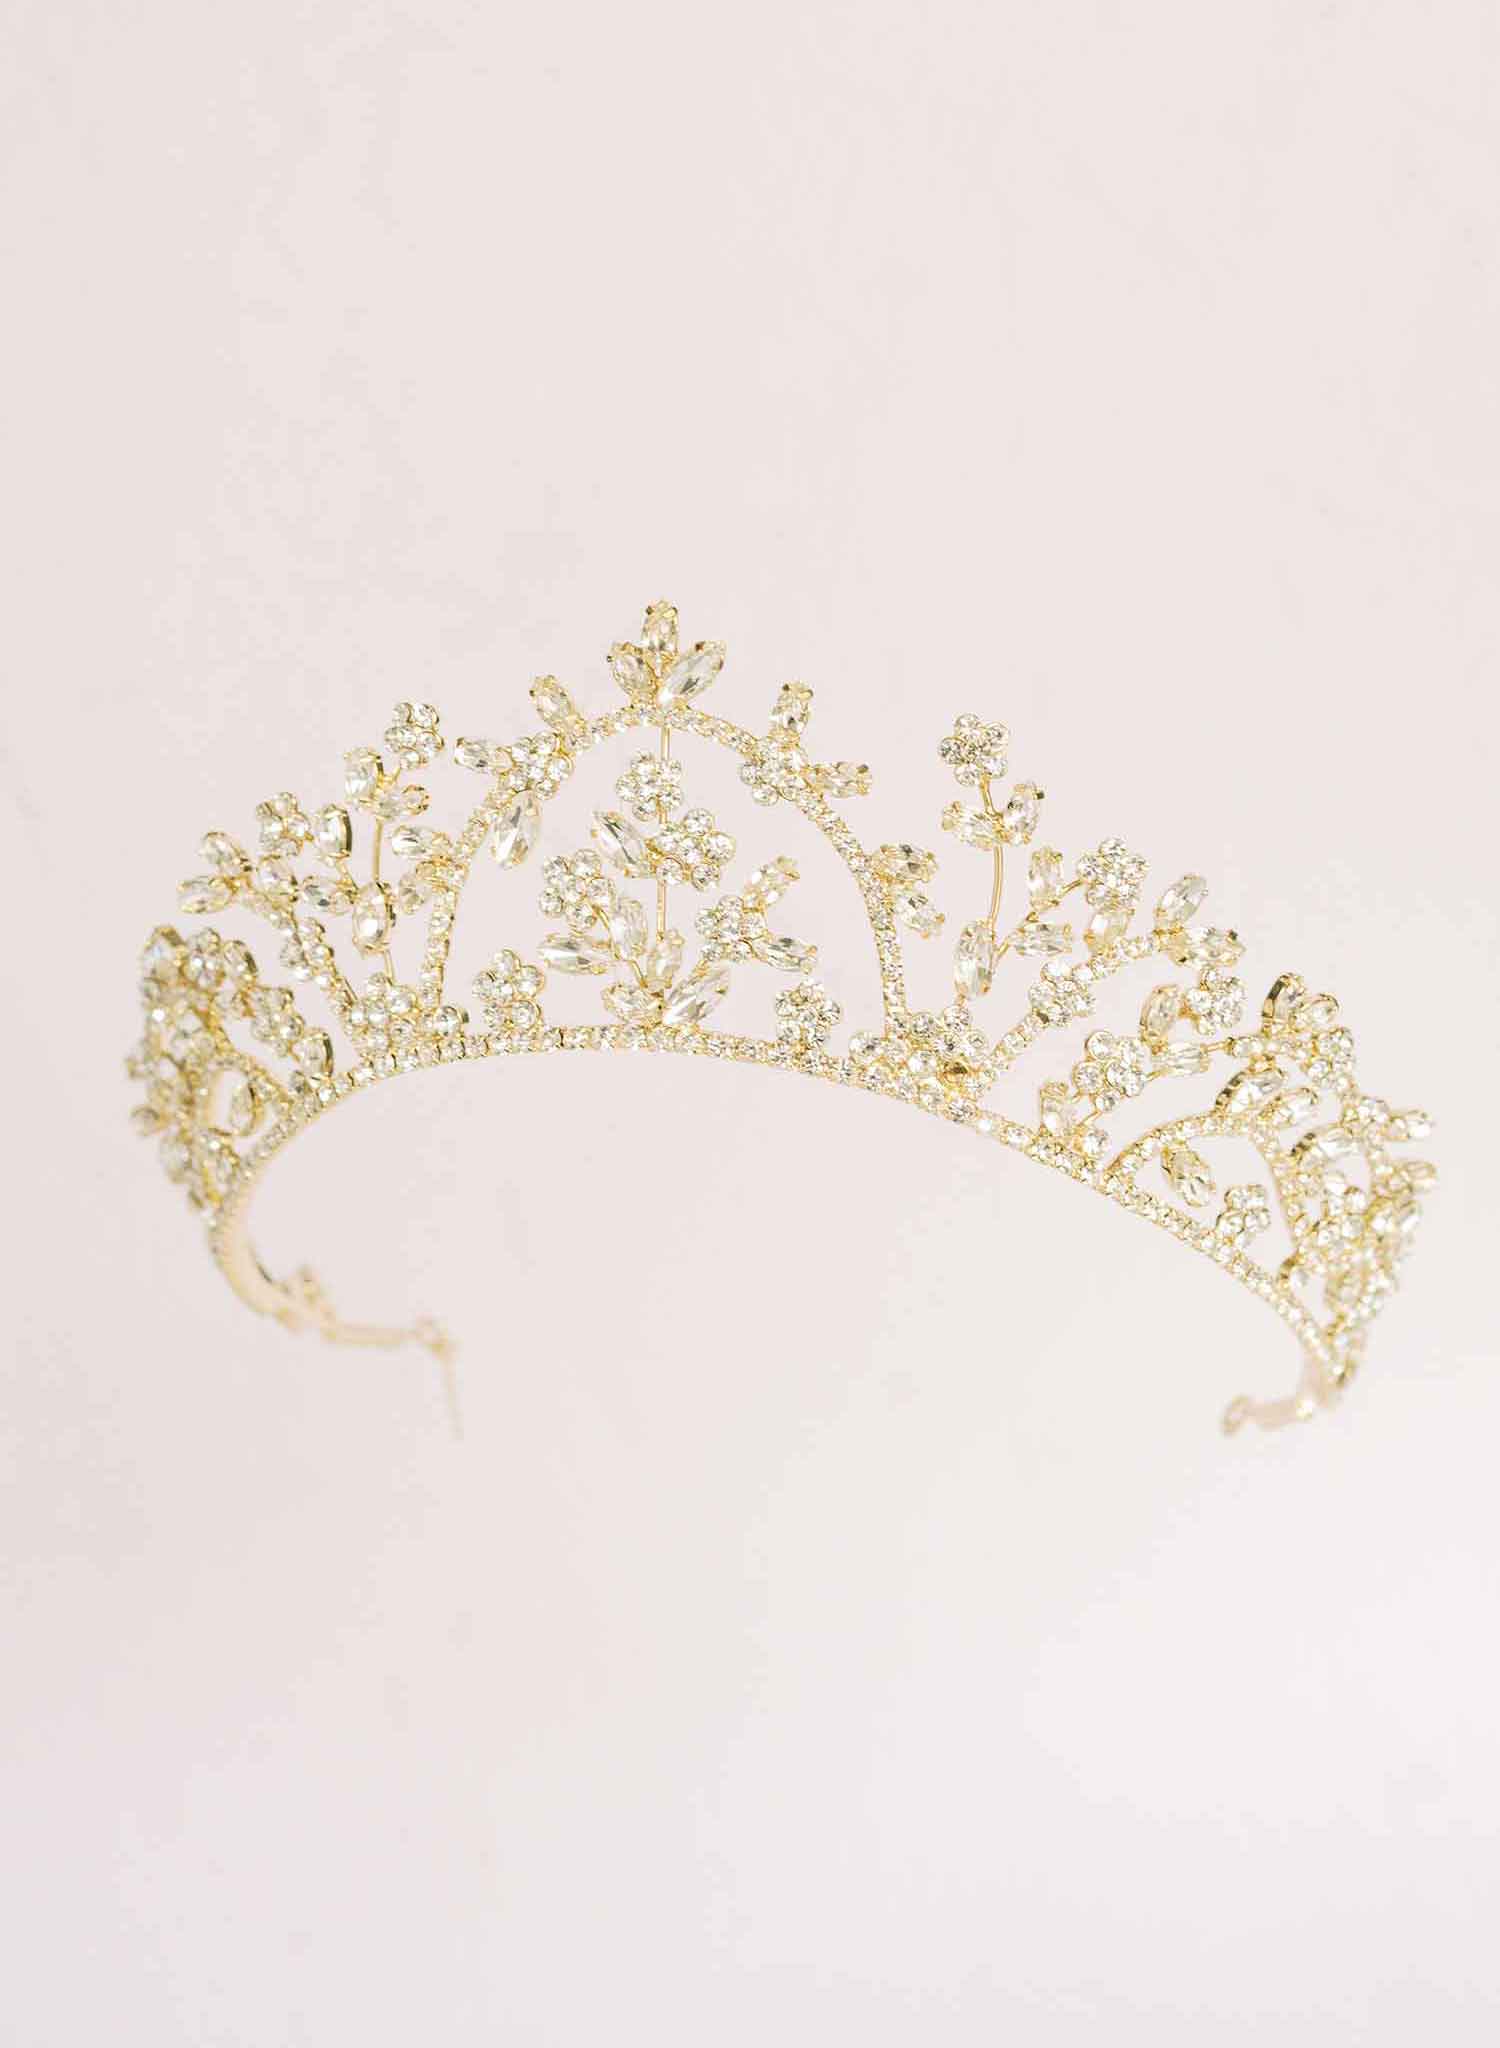 crystal crown, tiara - Majestic raised crystal tiara - Style #2150 | & ®, LLC